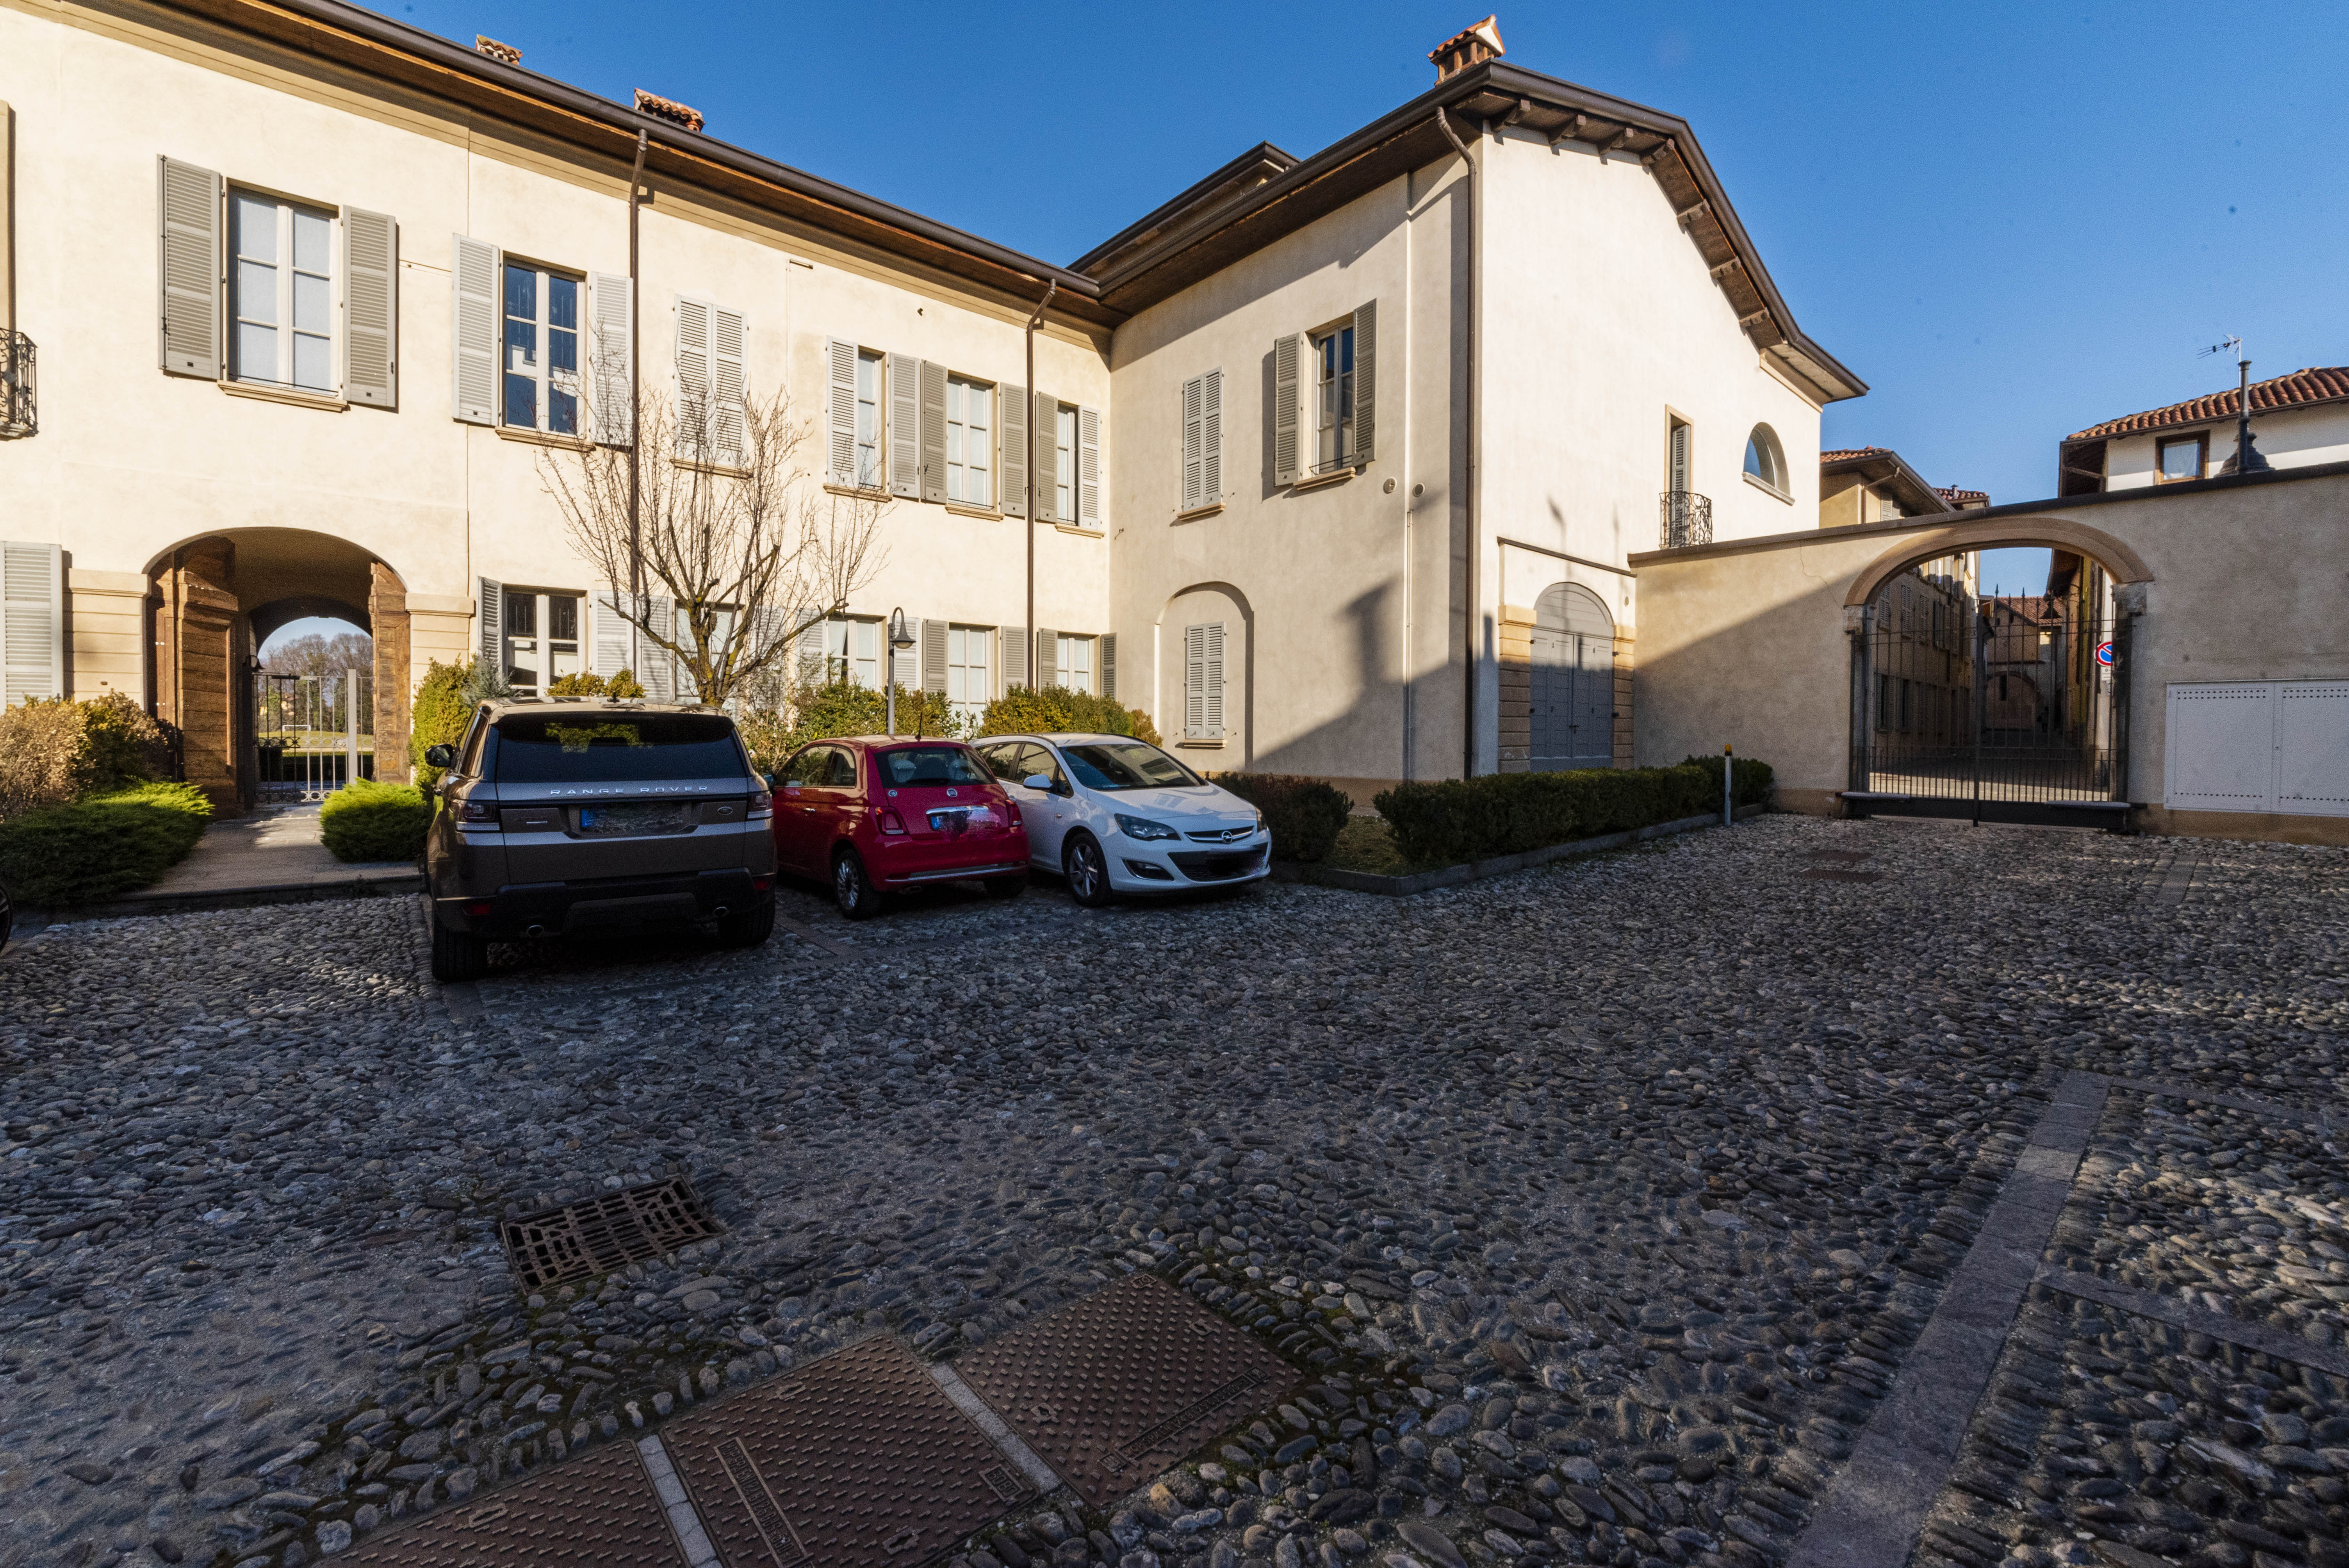 Residenza in villa storica a 41 km da Milano